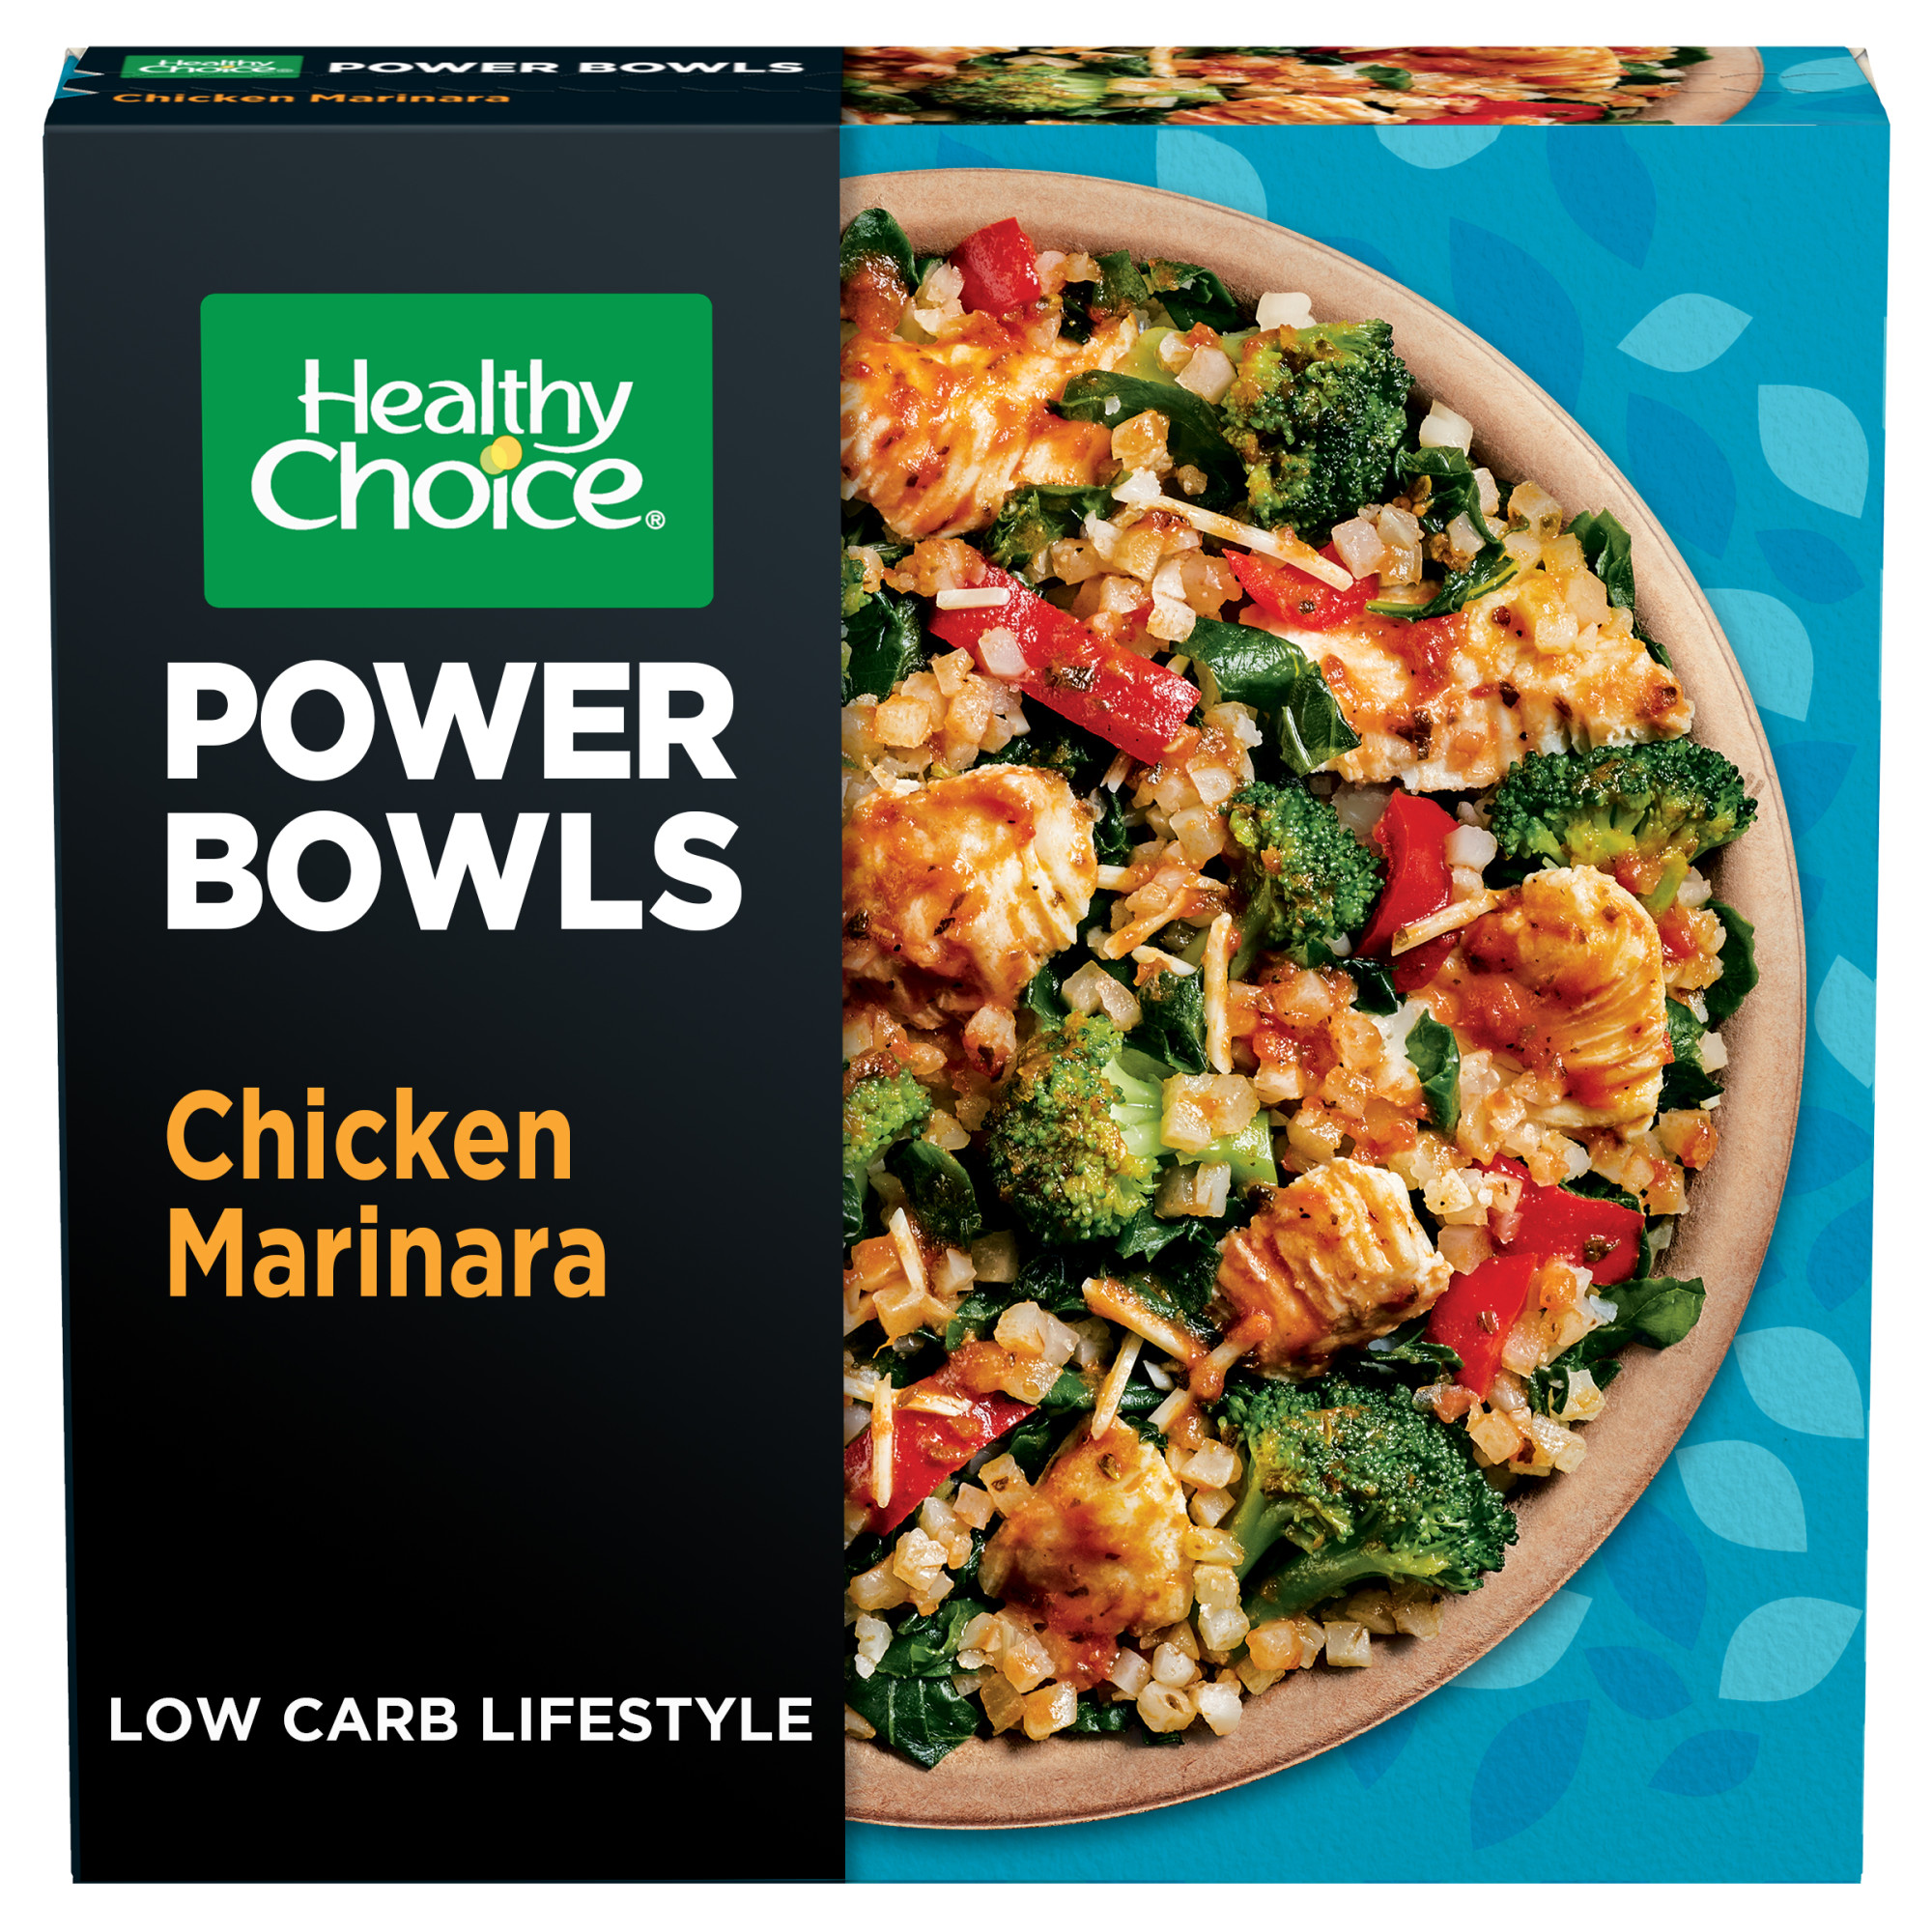 Healthy Choice Power Bowls Chicken Marinara, Frozen Meal, 9.25 oz Bowl (Frozen) - image 1 of 8